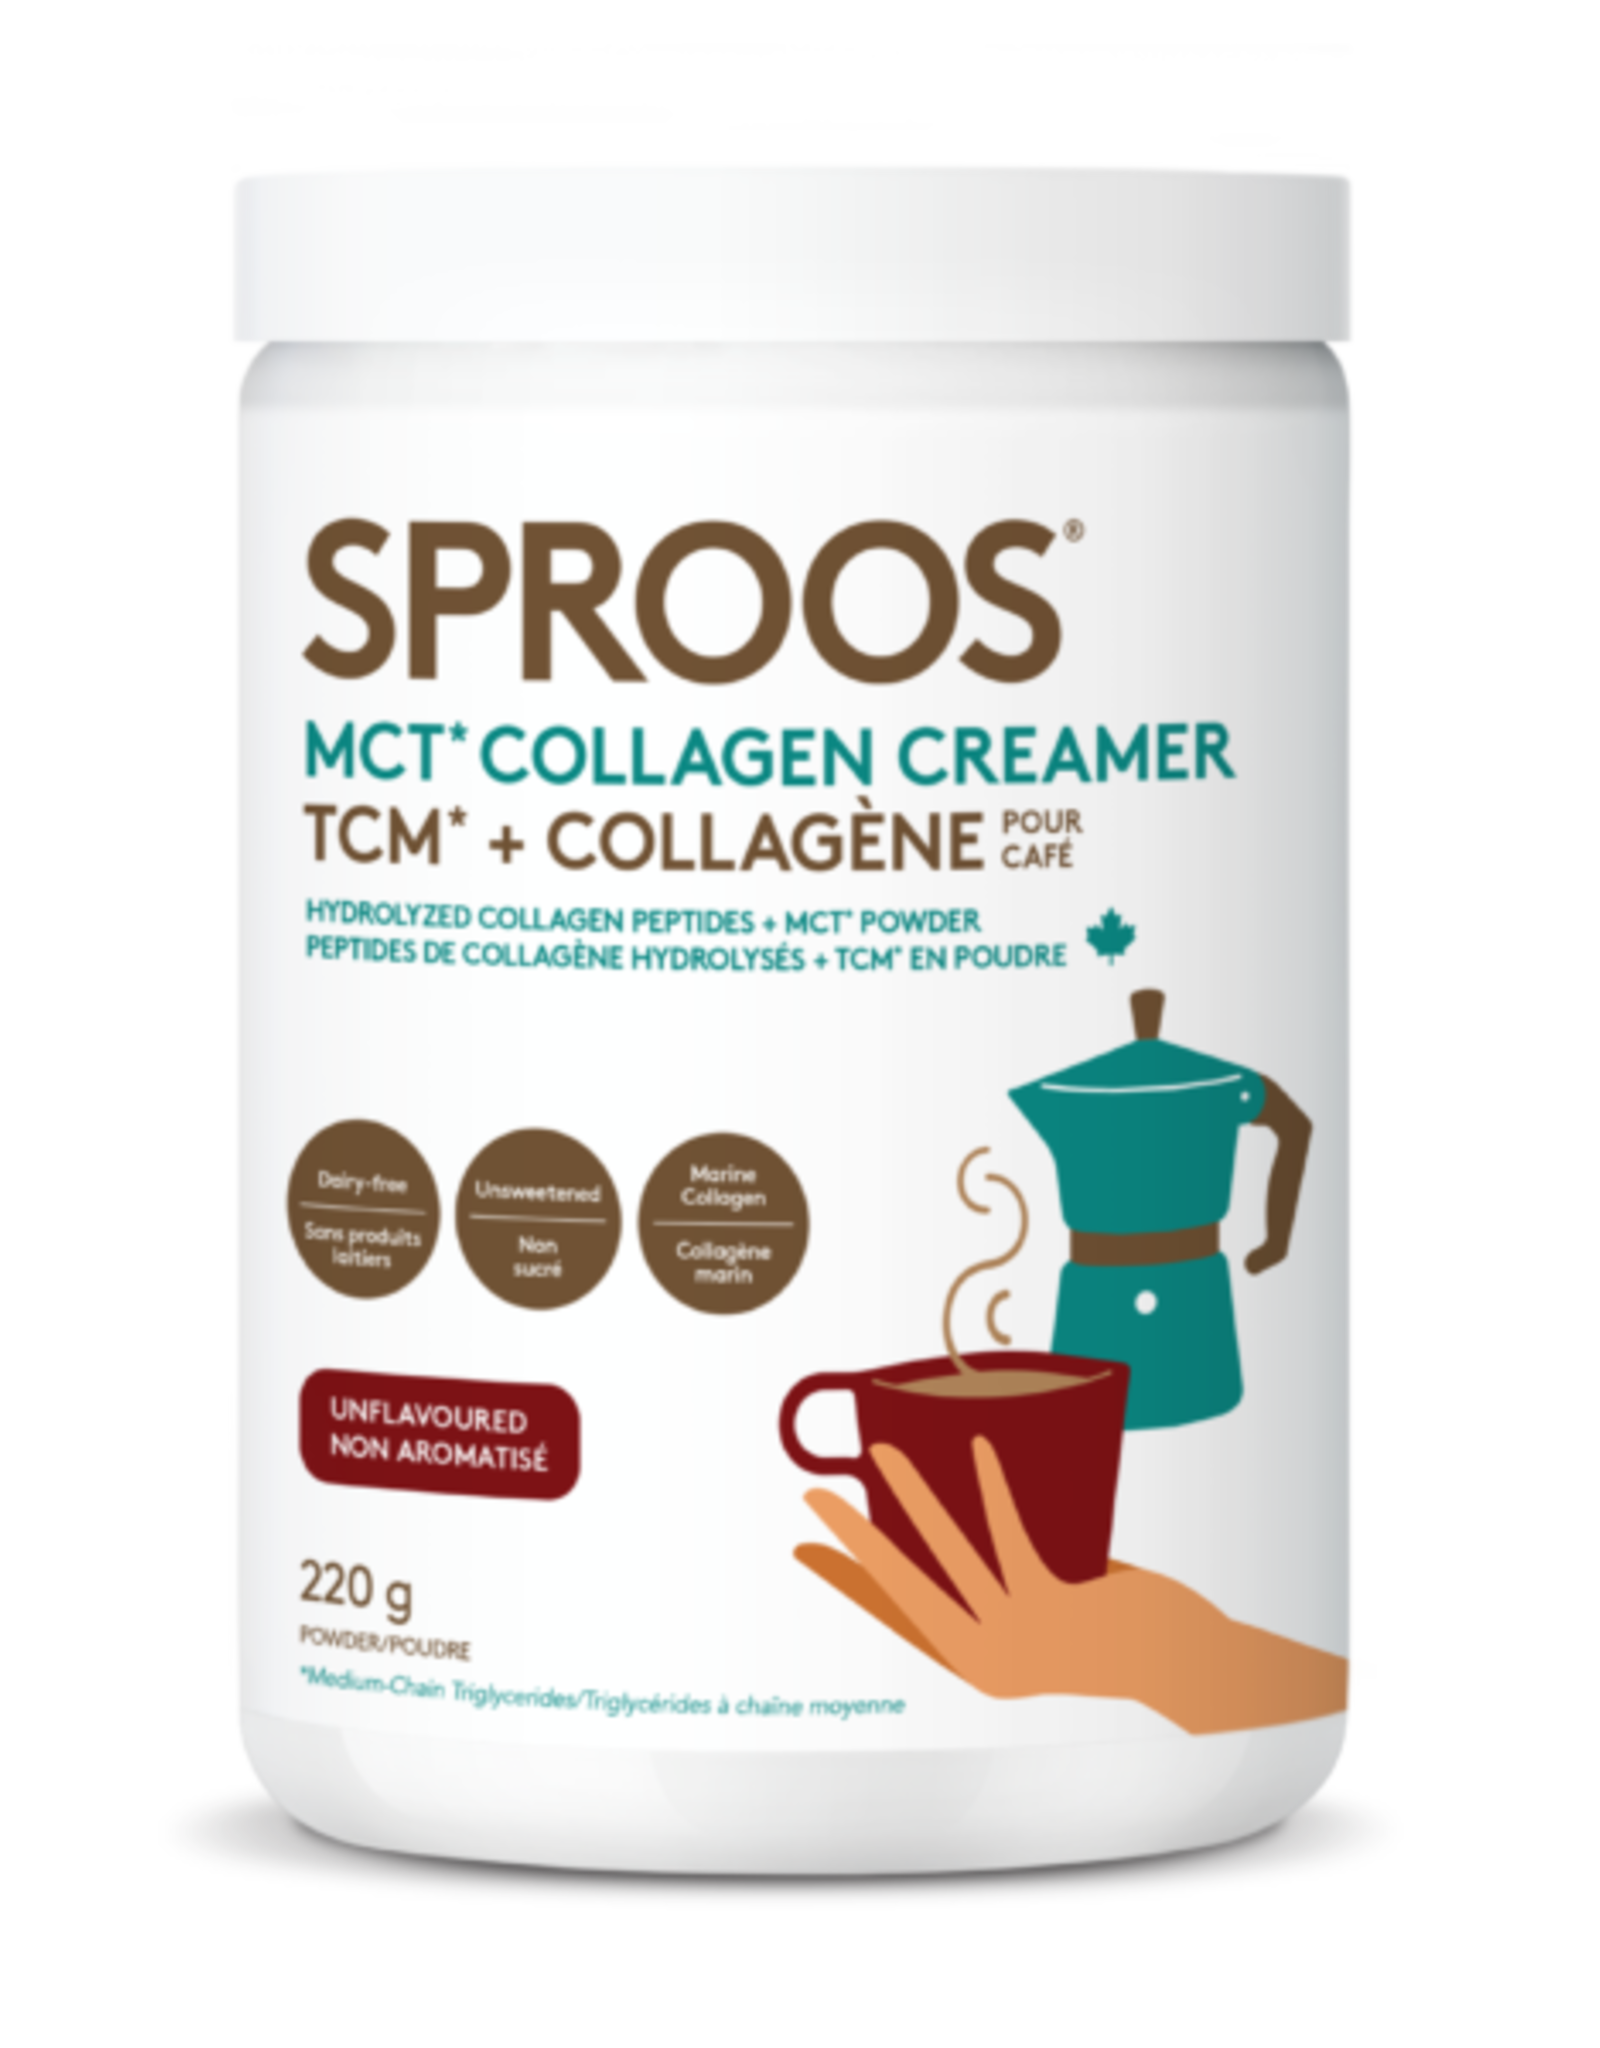 Sproos MCT Collagen Creamer - Unflavoured